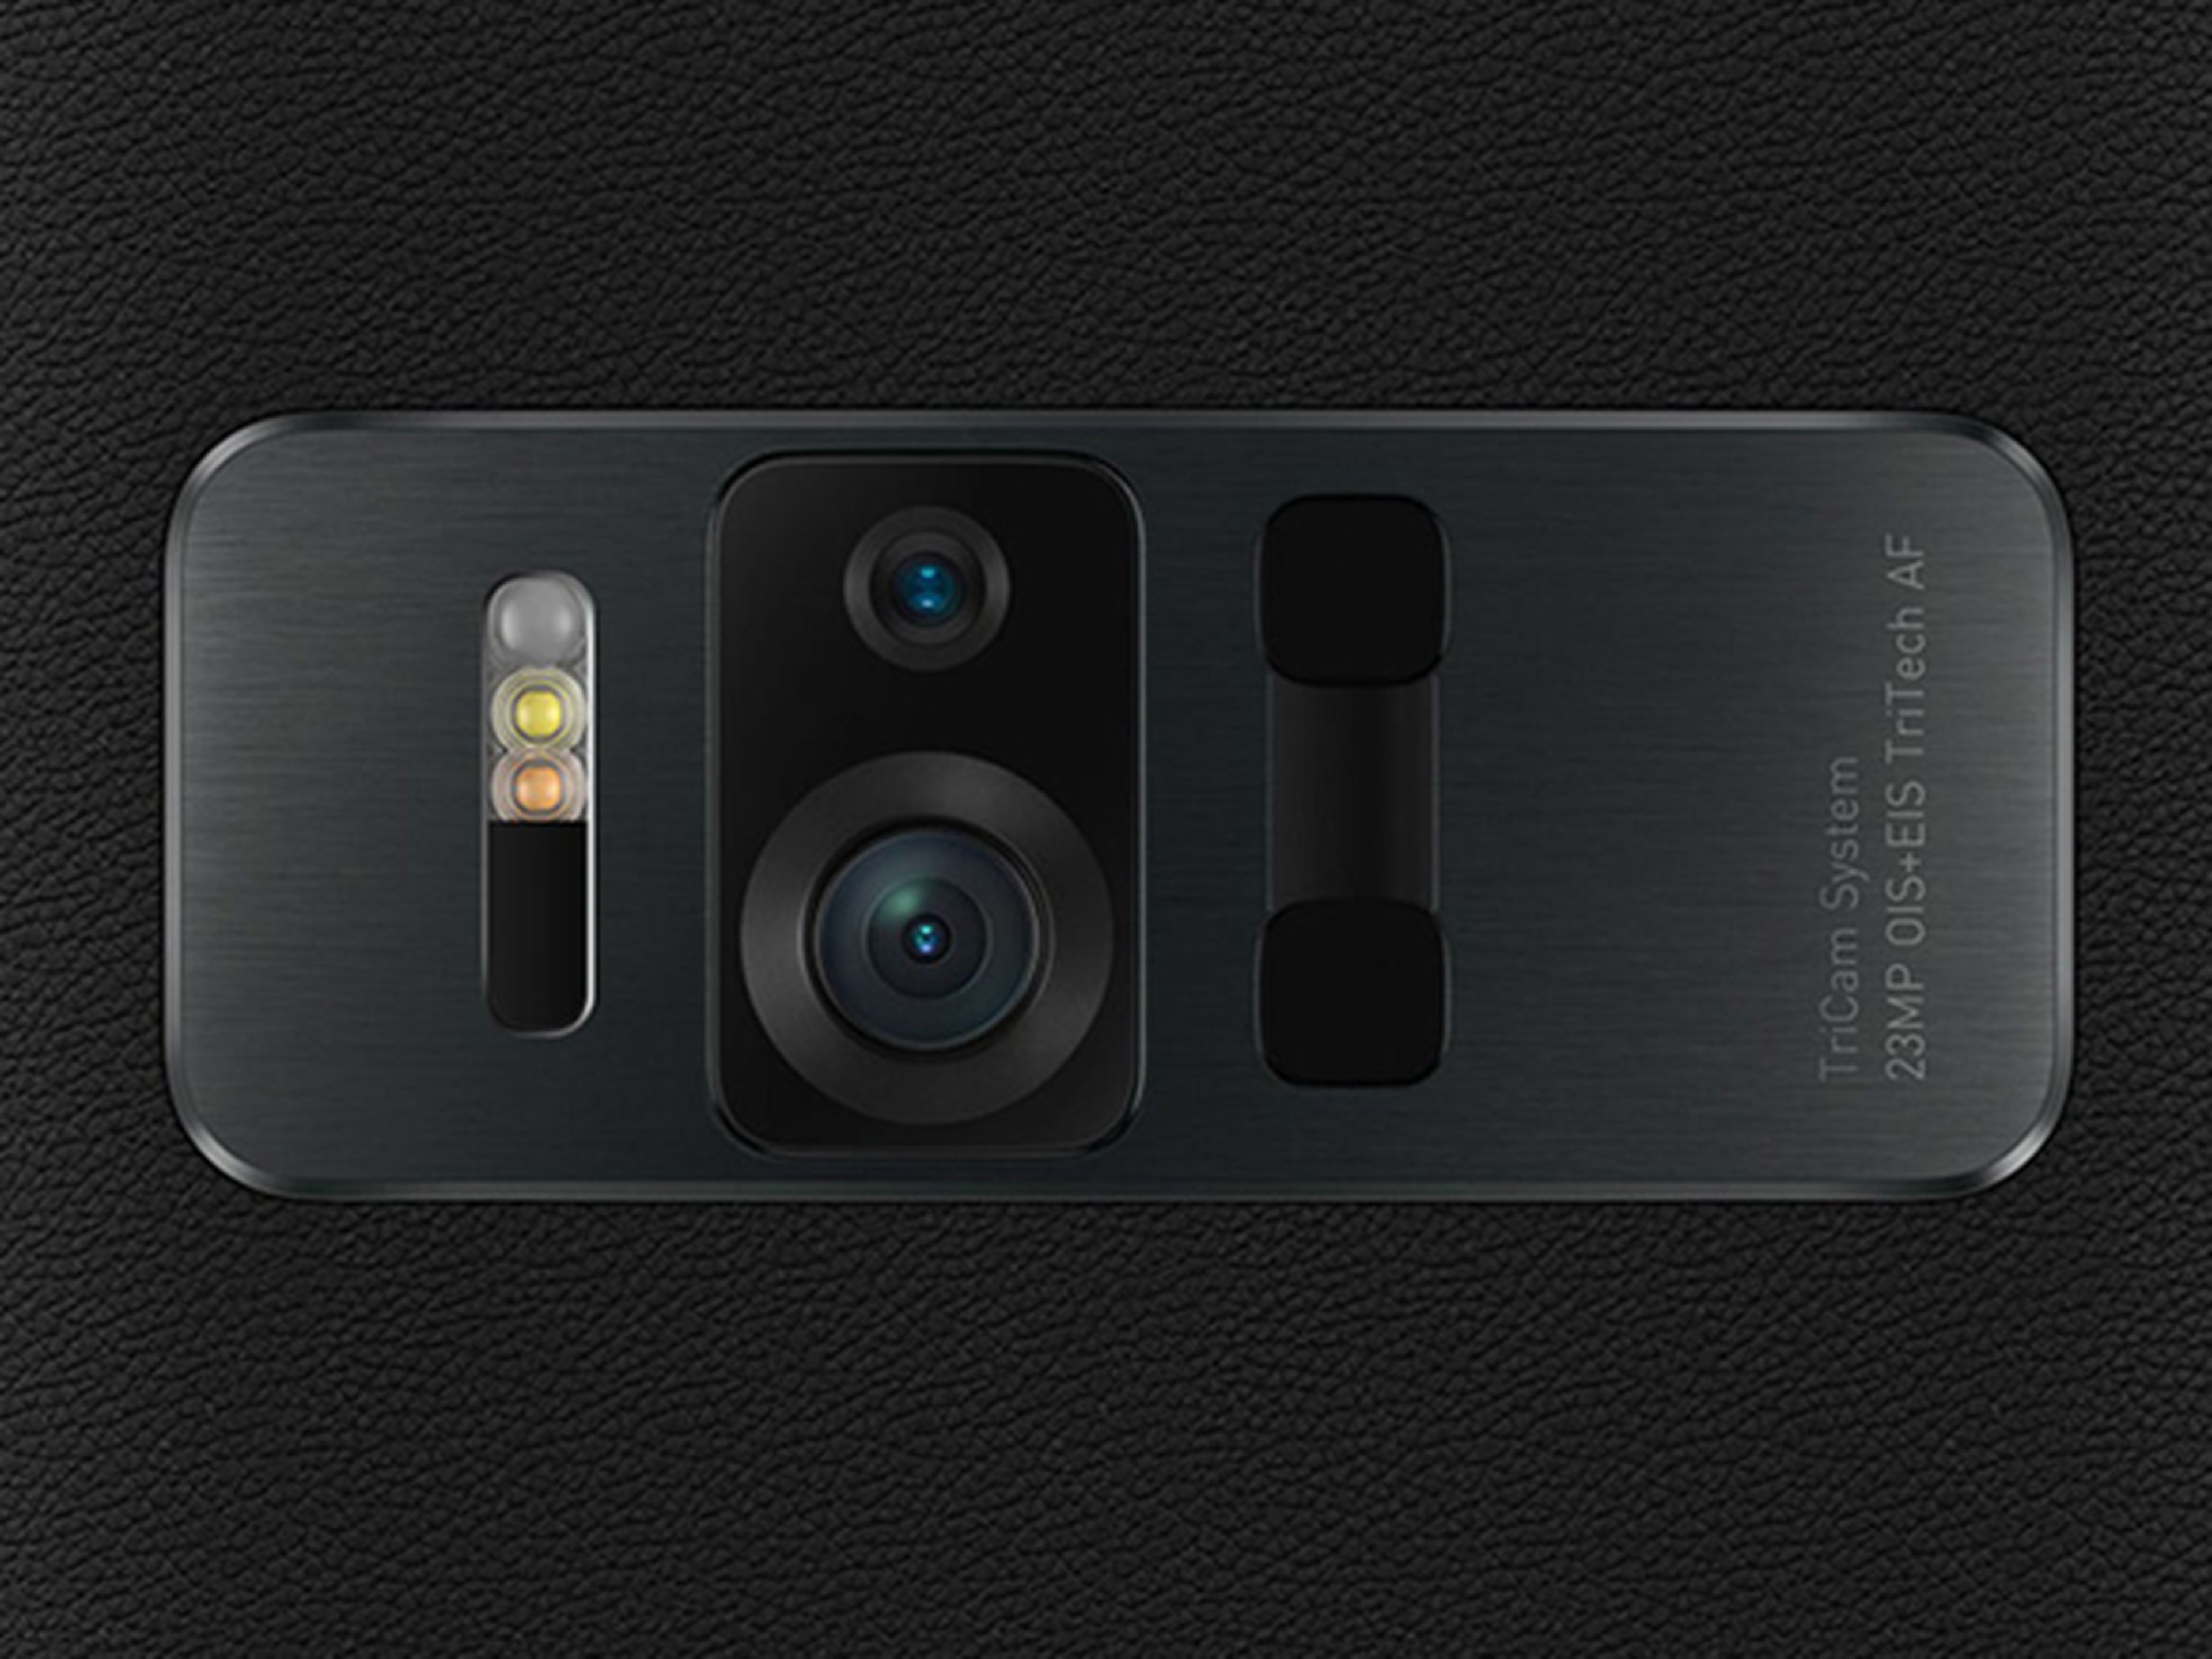 La triple cámara del ASUS ZenFone AR